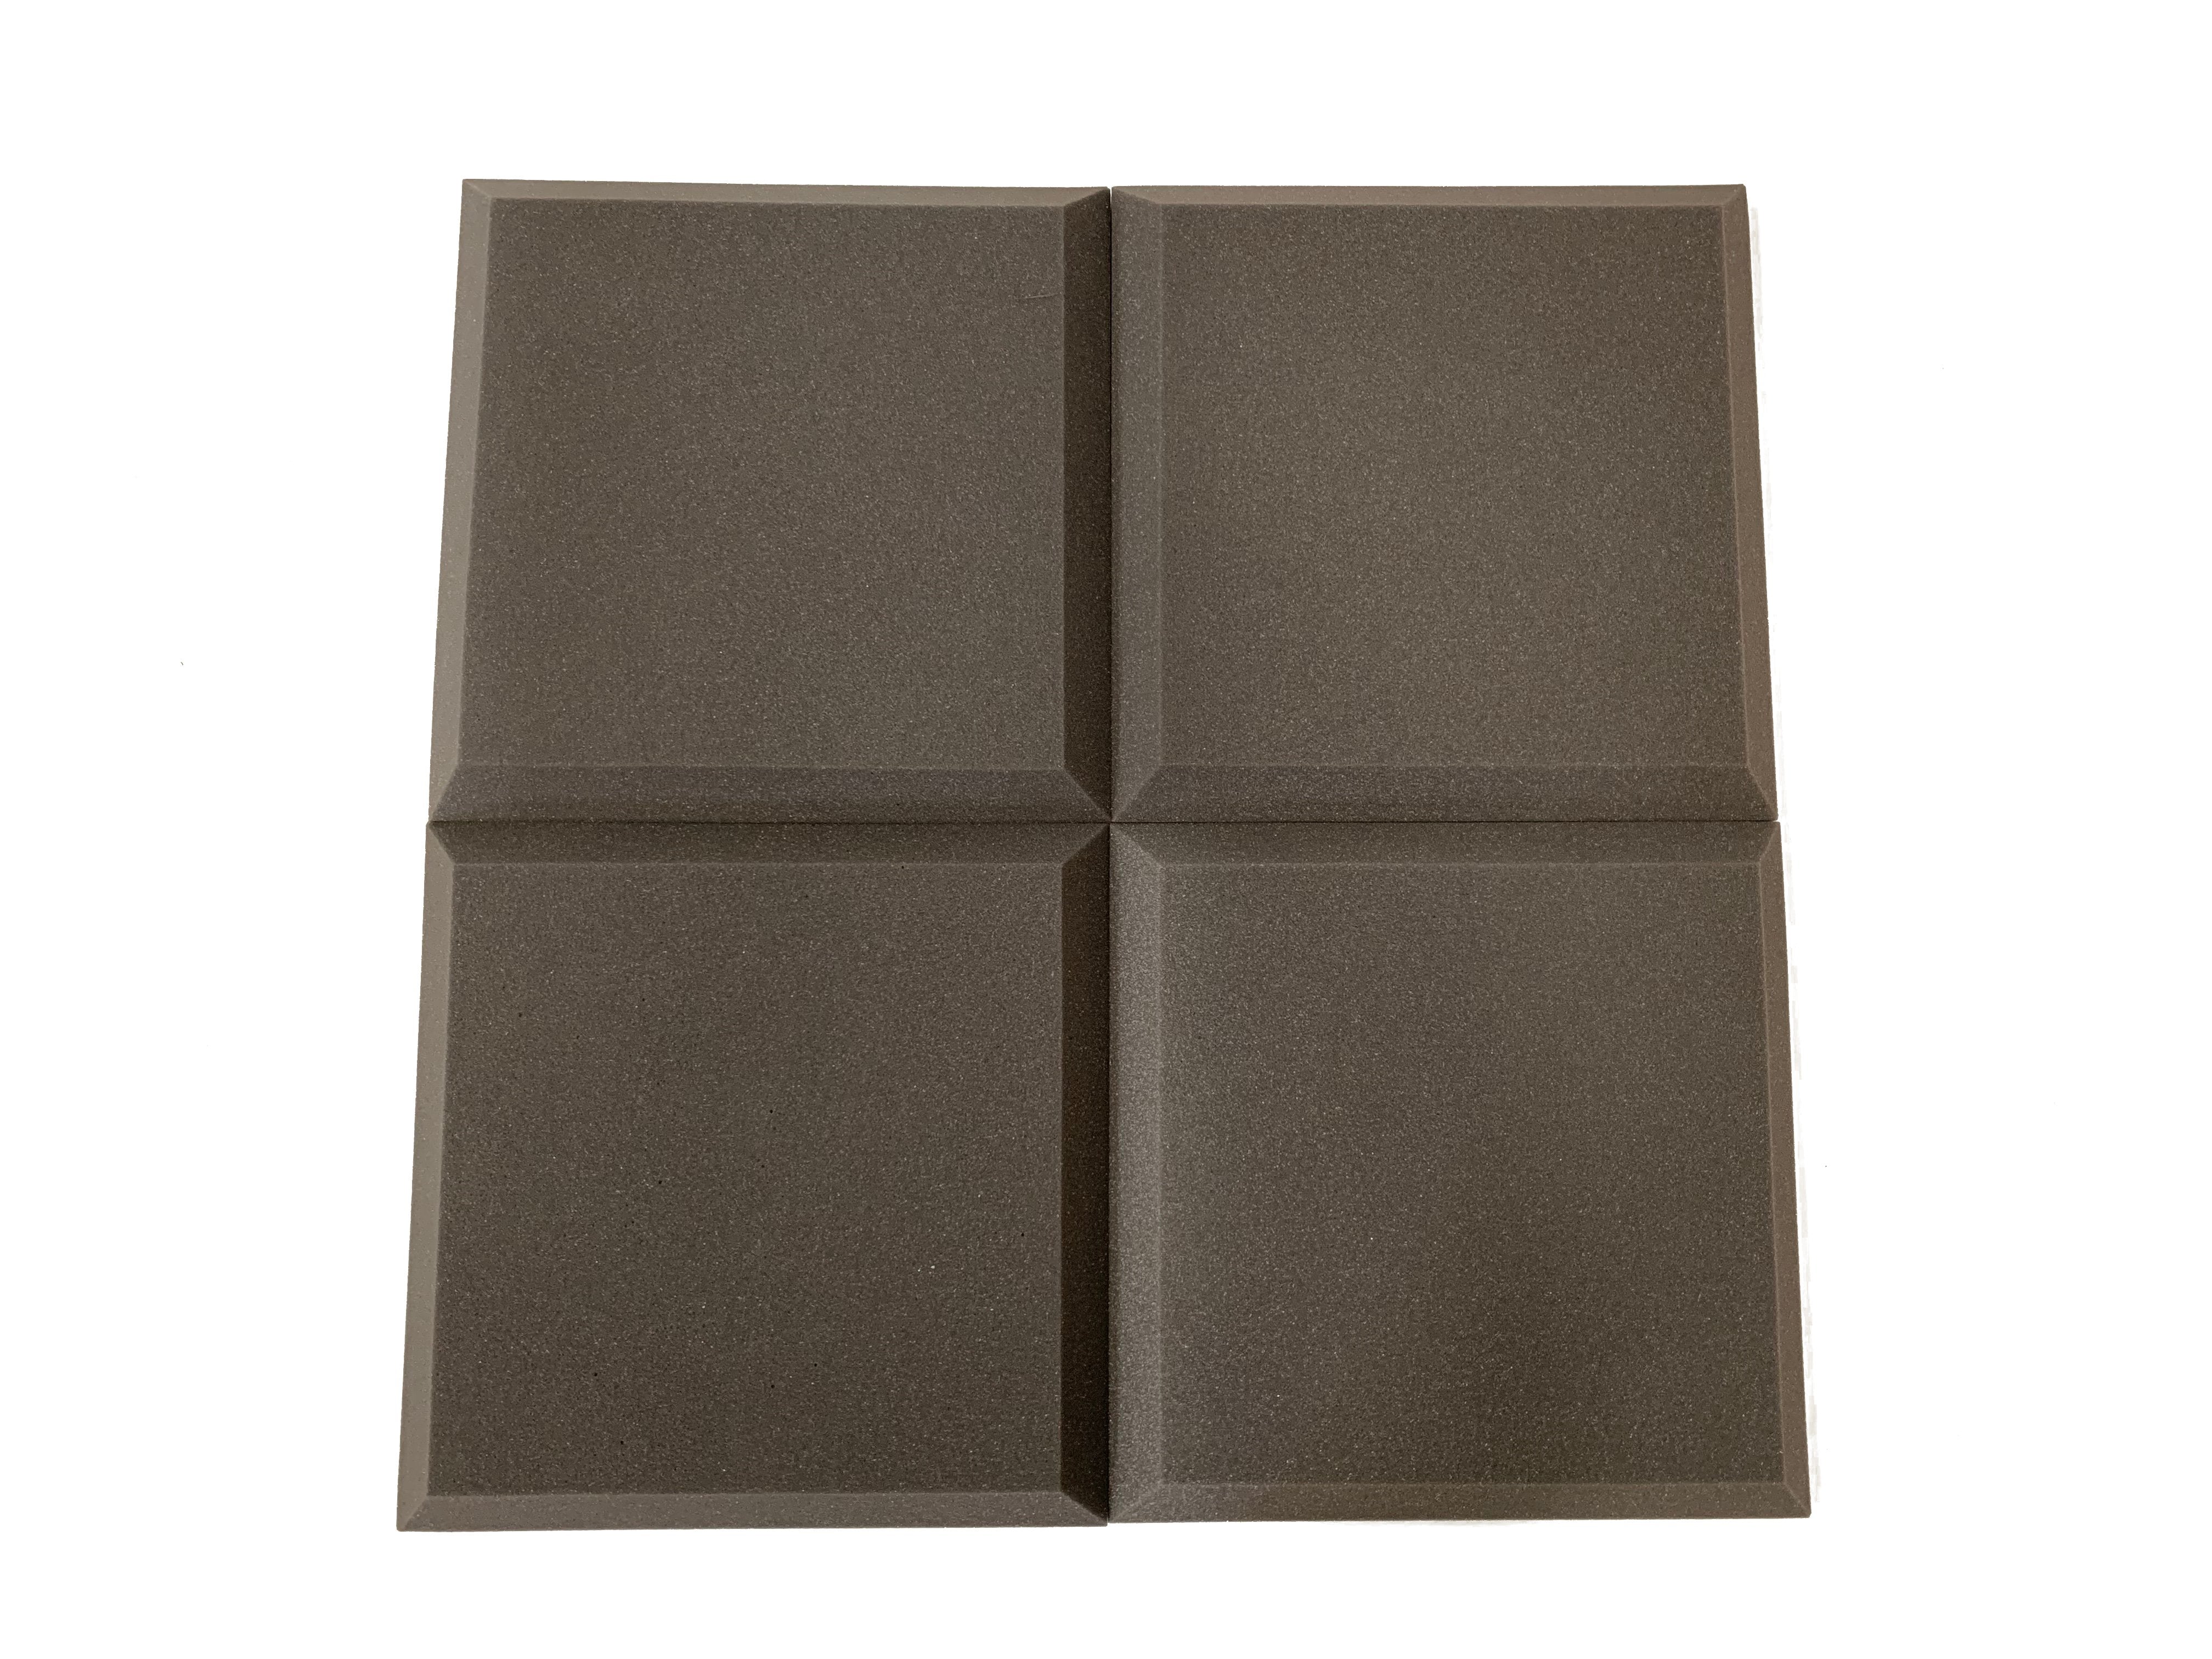 Euphonic F.A.T Standard Acoustic Studio Foam Tile Pack - Advanced Acoustics